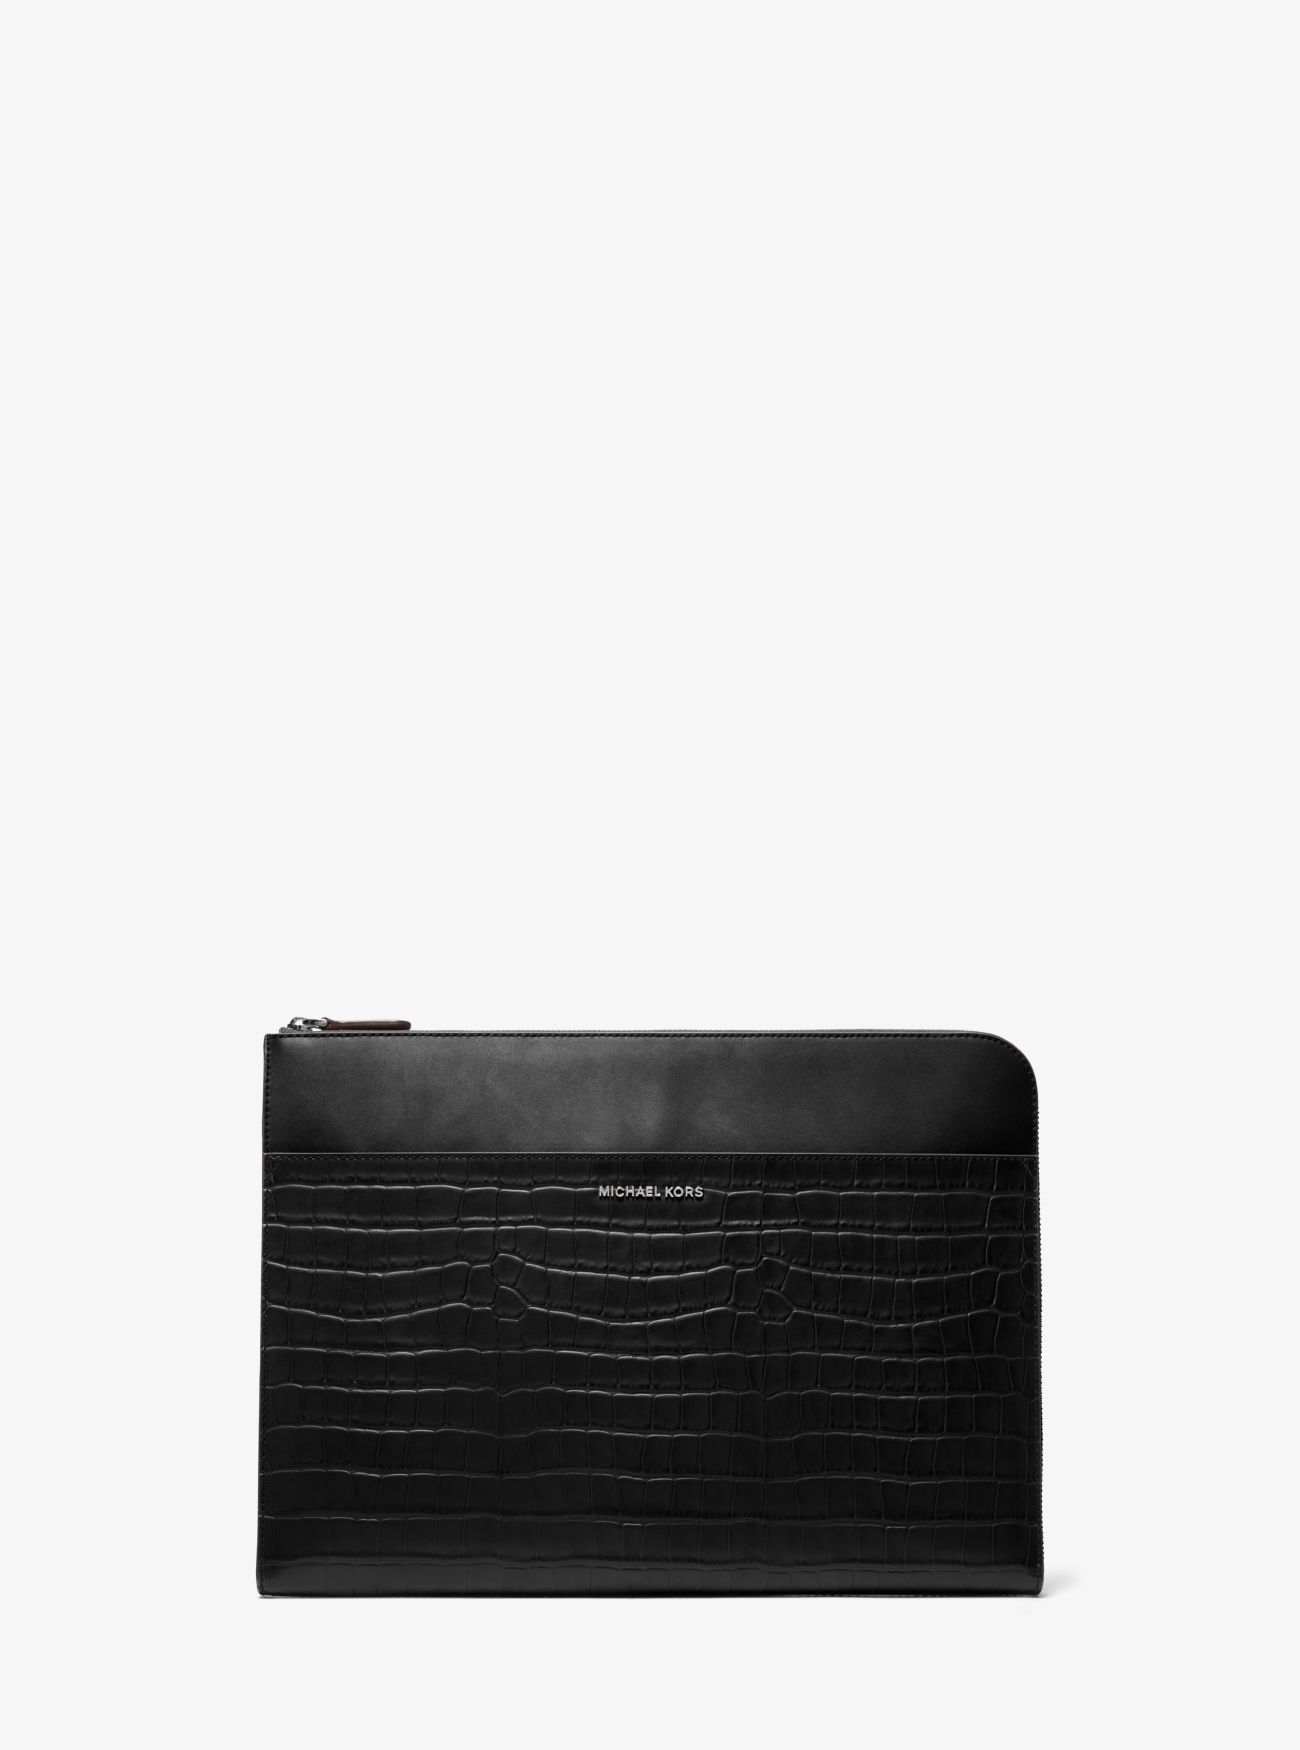 MK Hudson Crocodile Embossed Leather Laptop Case - Black - Michael Kors